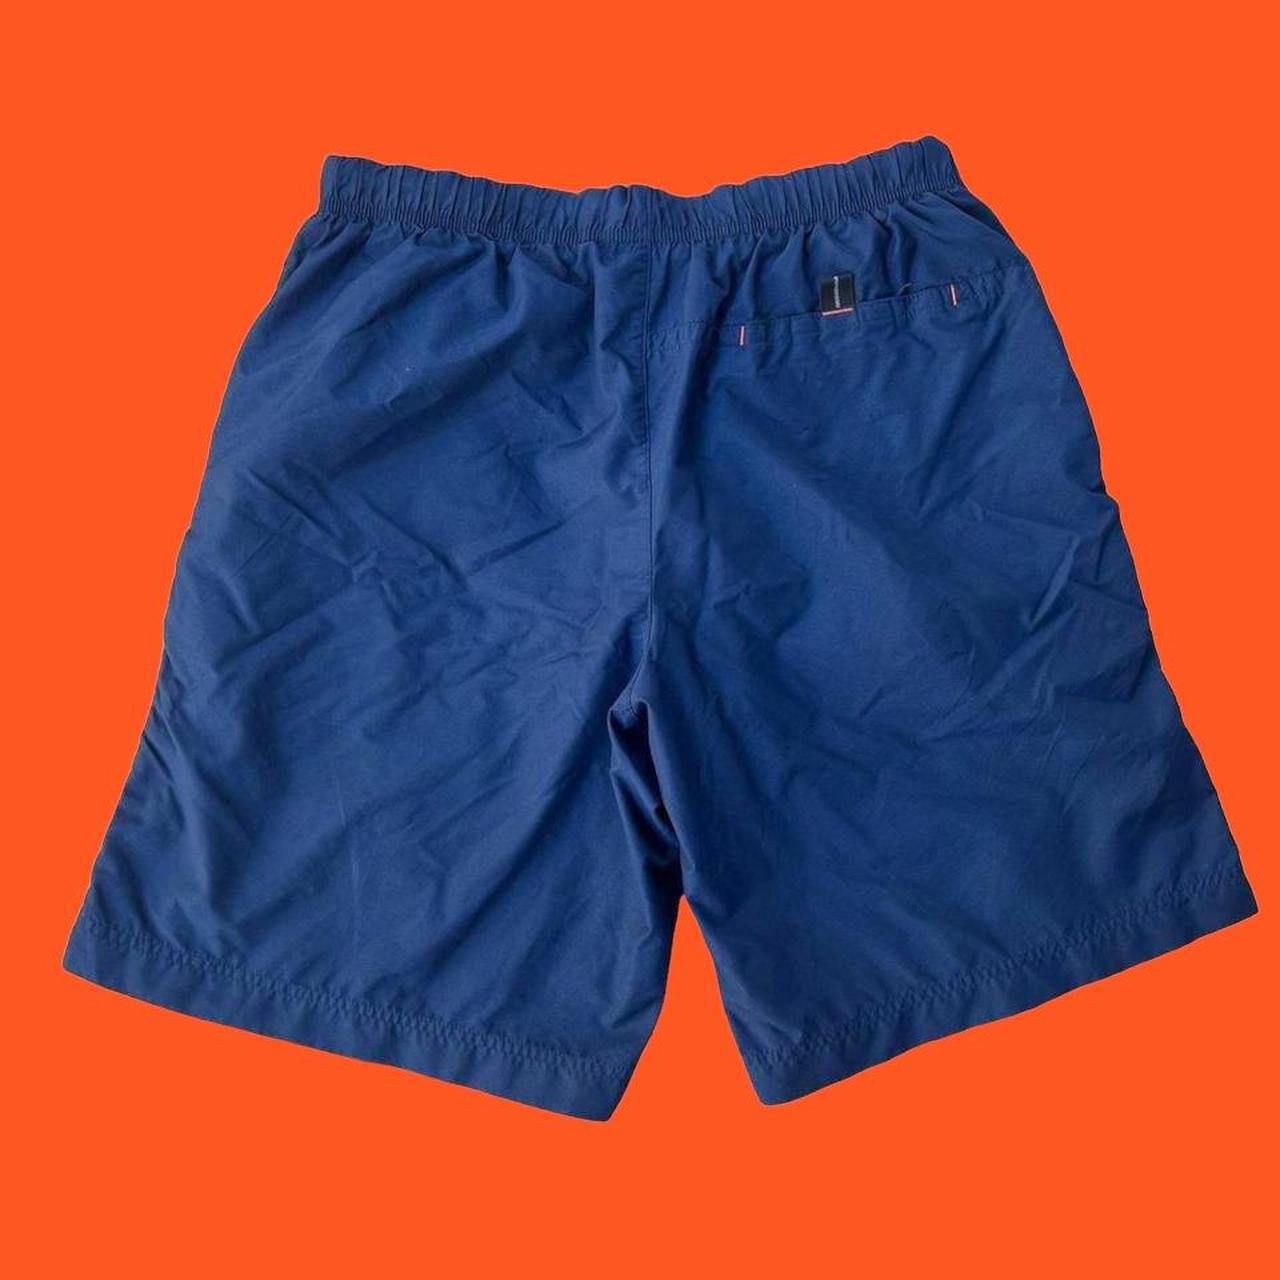 Nike Men's Navy and Orange Swim-briefs-shorts (2)